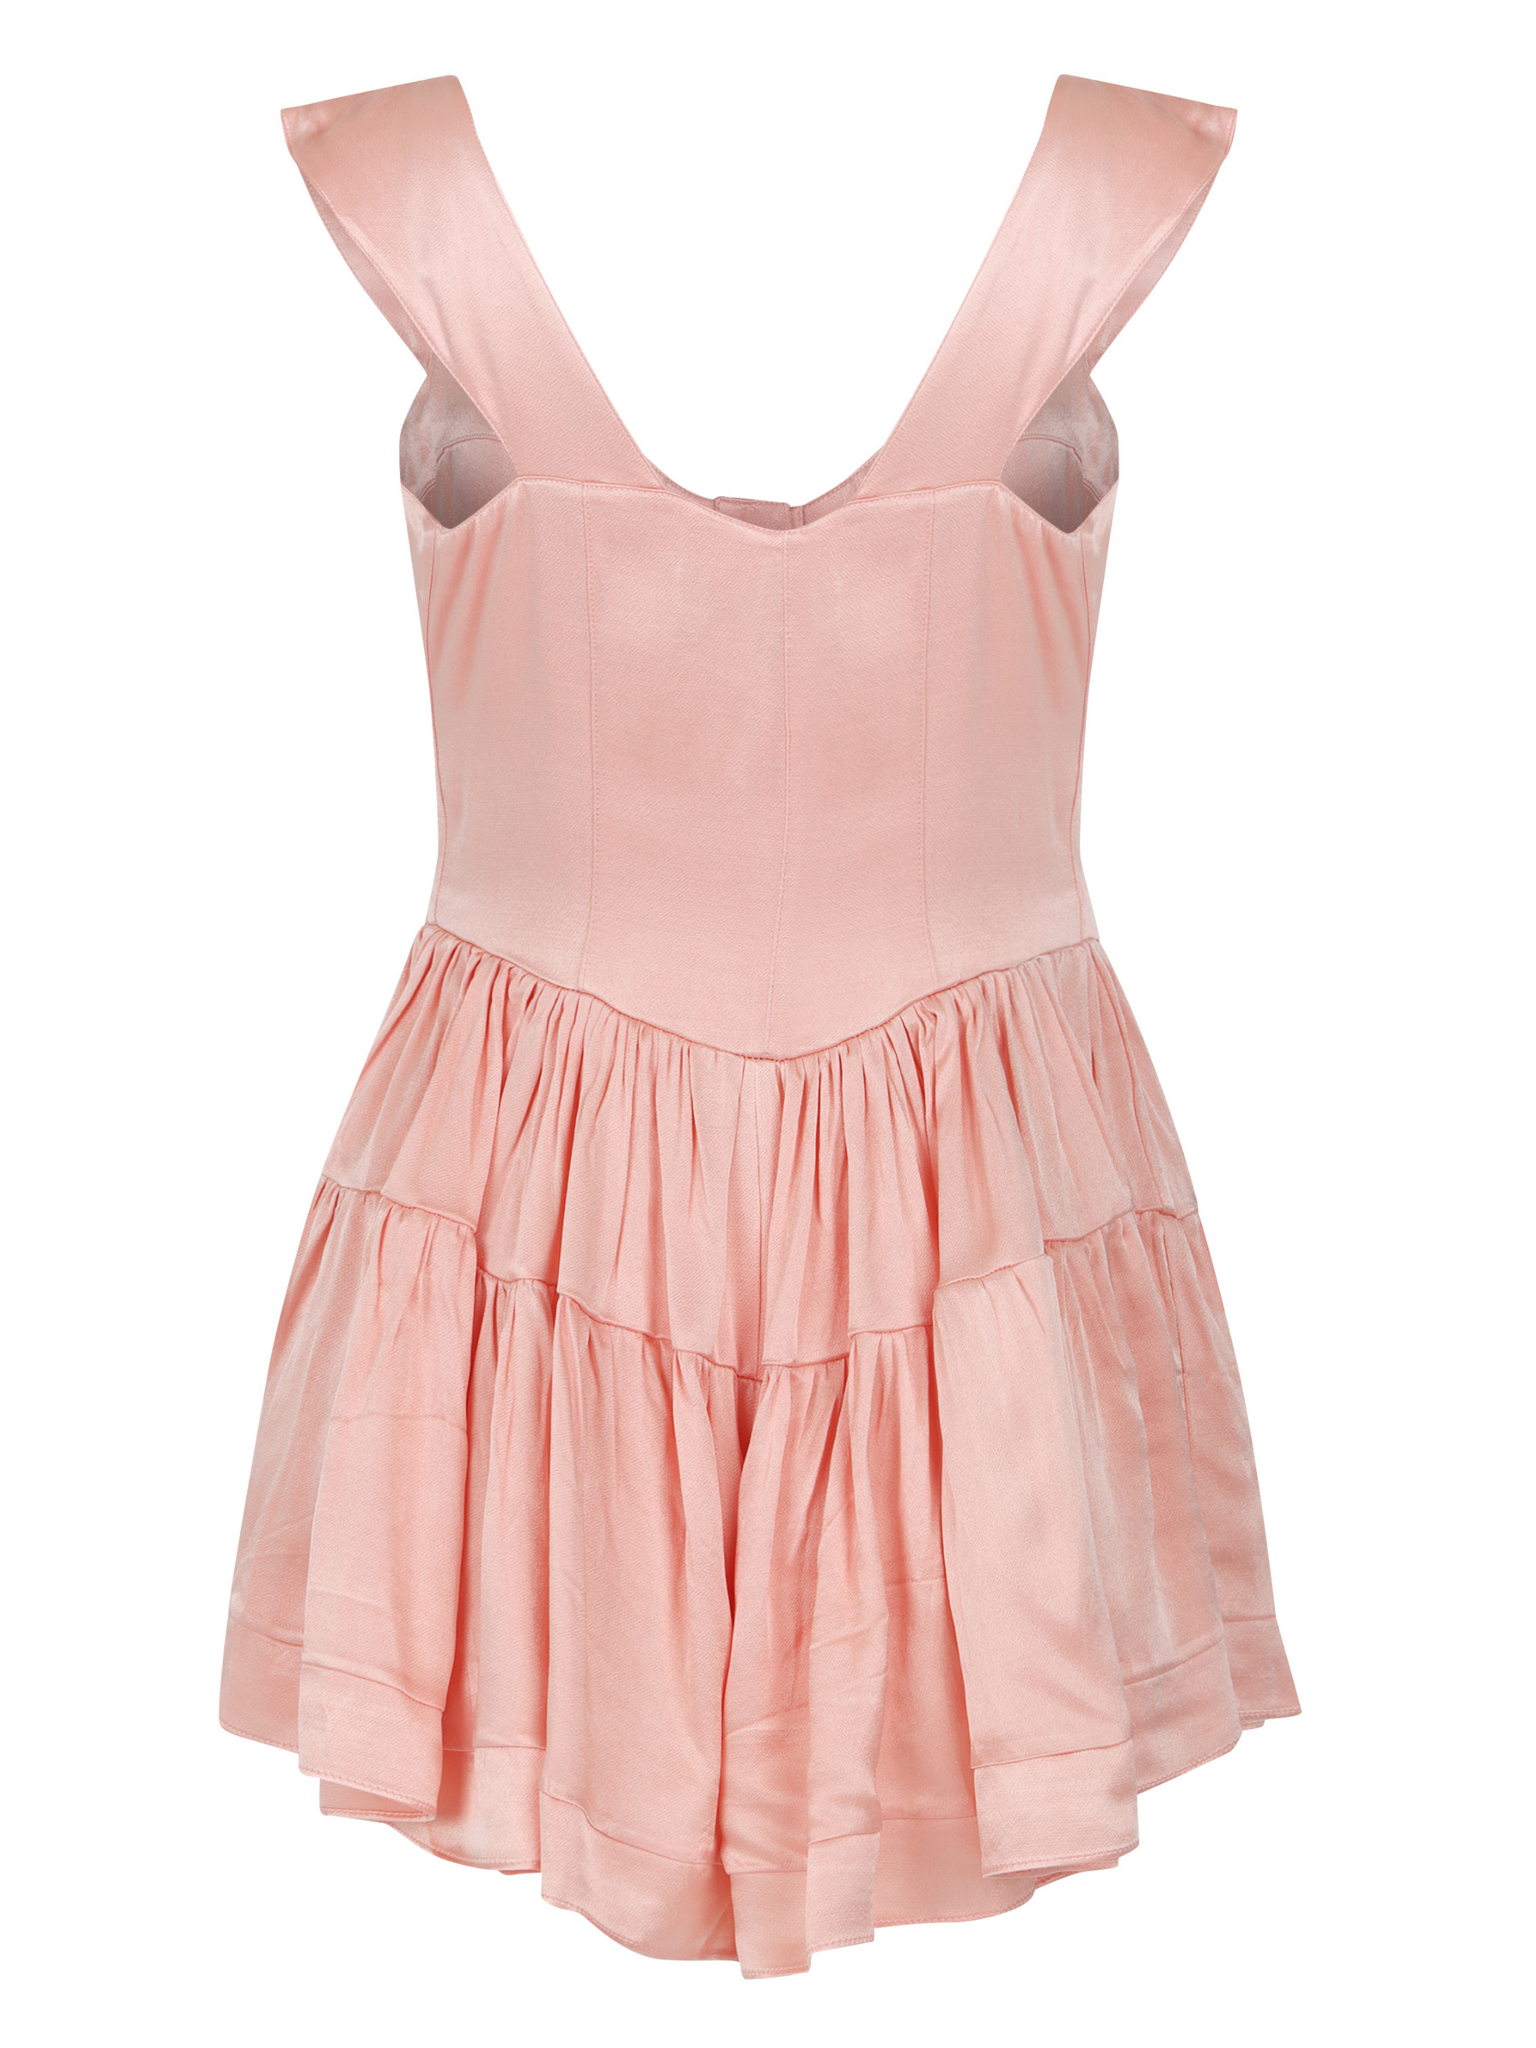 The Elisabeth Romper Dress - Baby Pink Satin